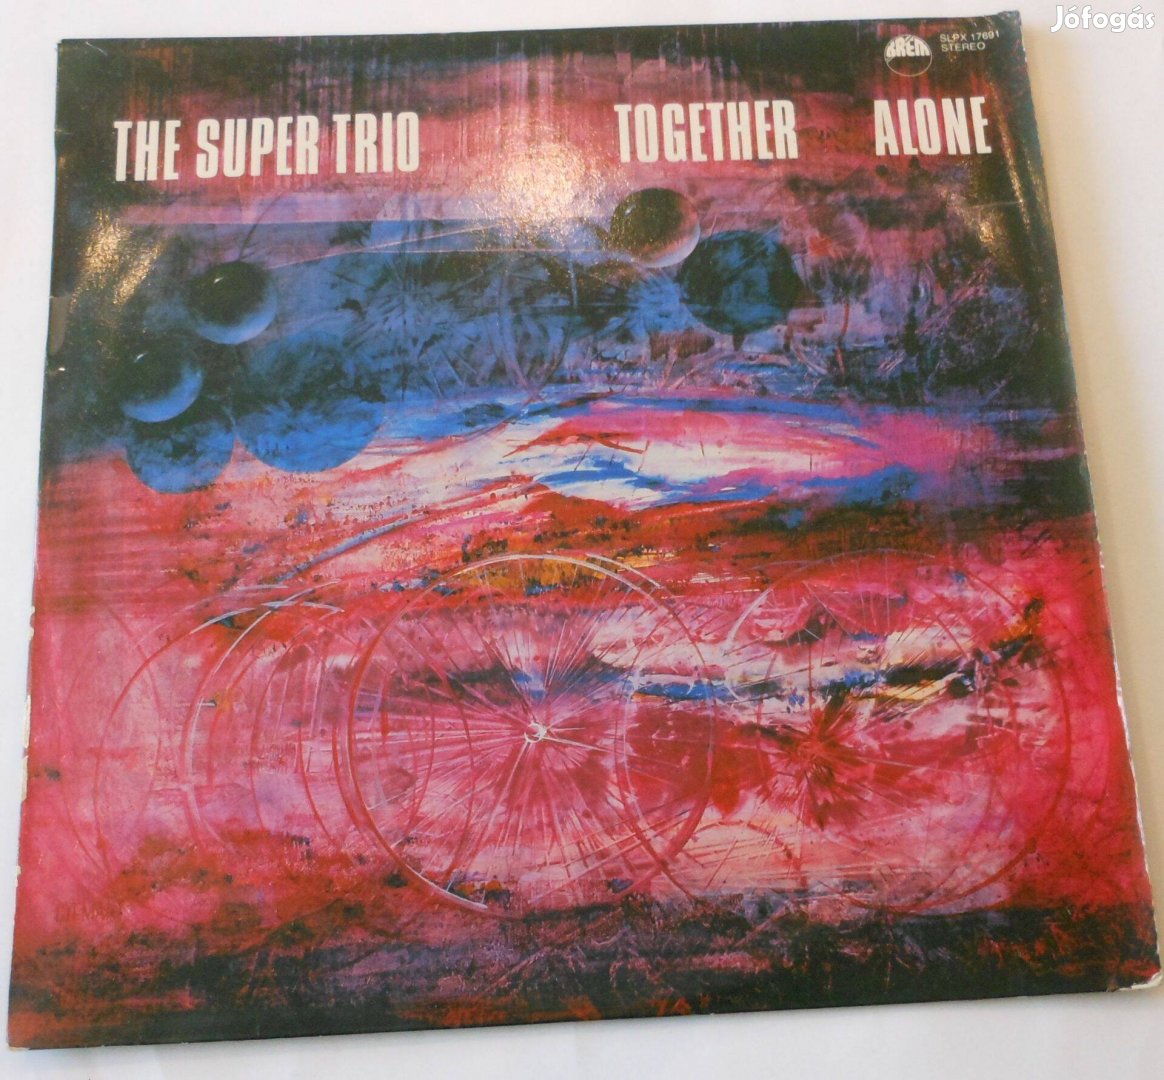 The Super Trió: Together Alone LP